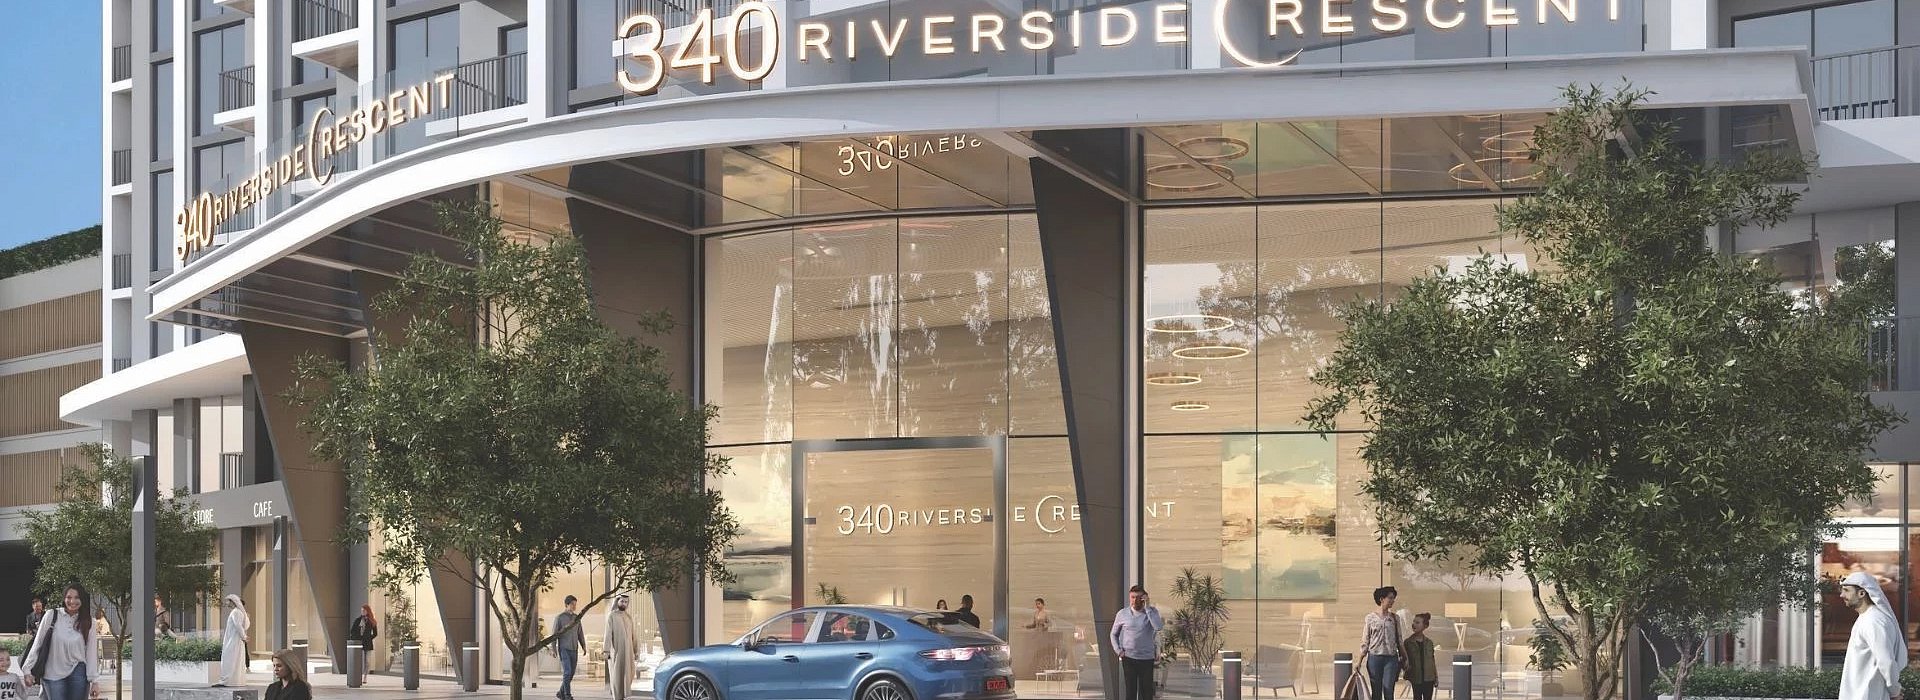 340 Riverside Crescent